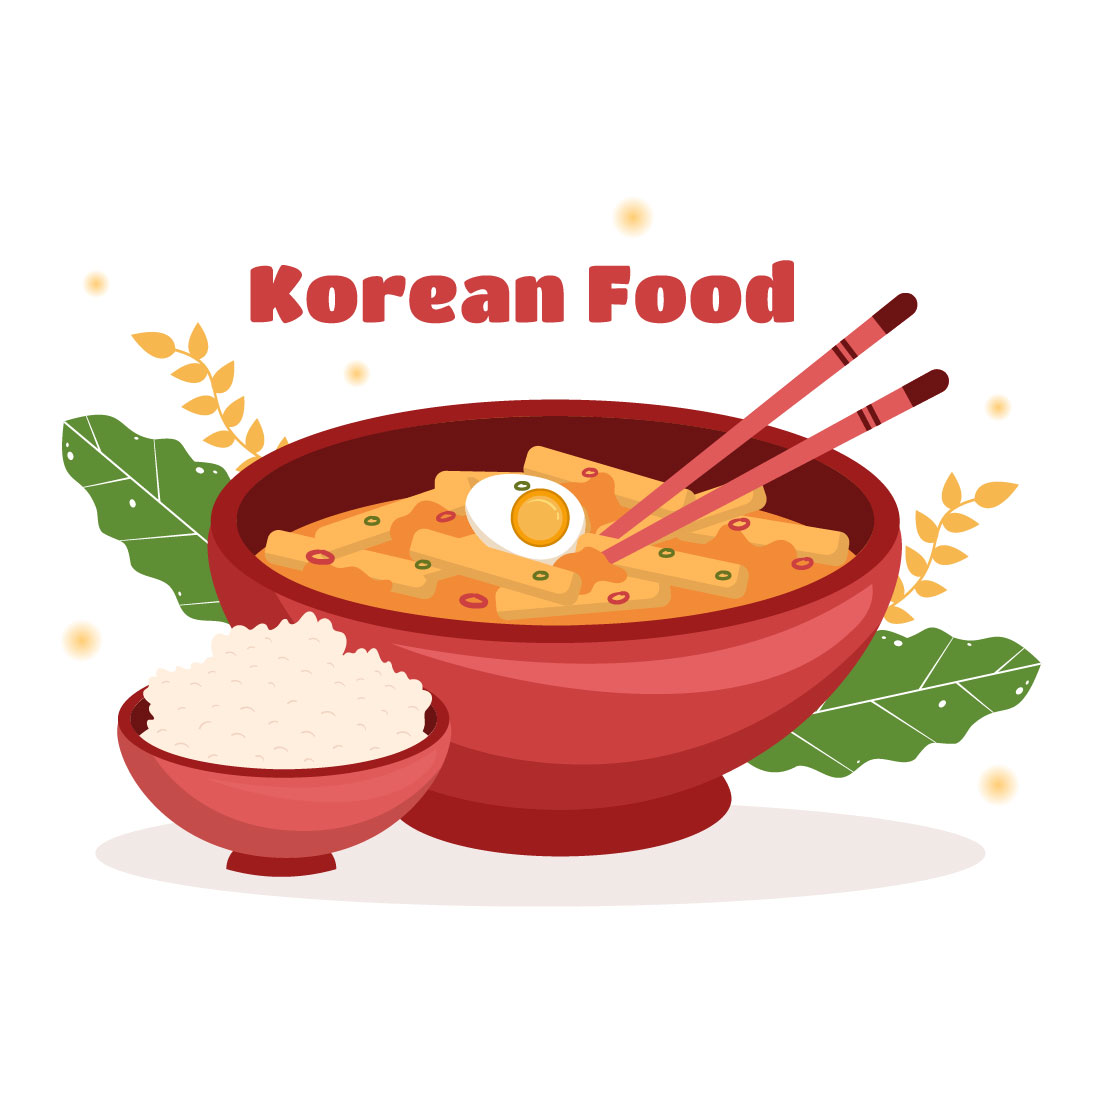 Korean Food Set Cartoon Design Illustration cover image.